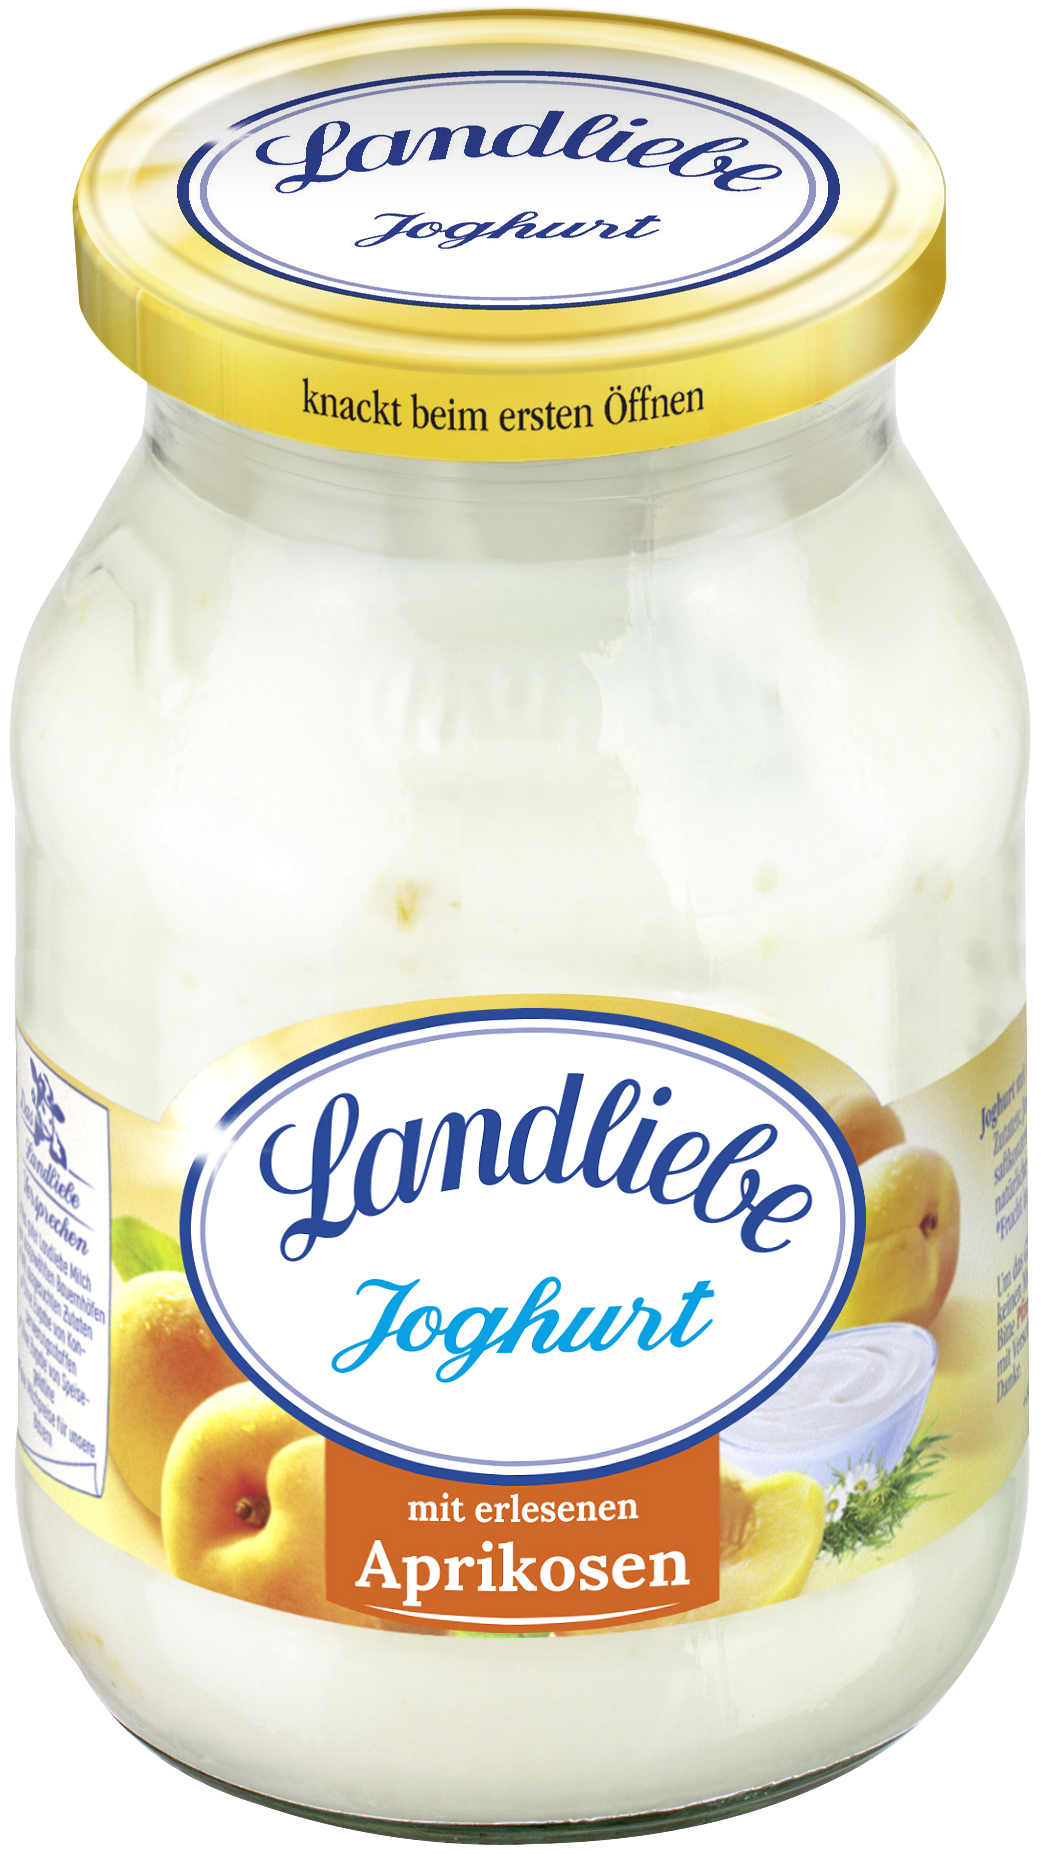 Landliebe Joghurt Aprikose Glas